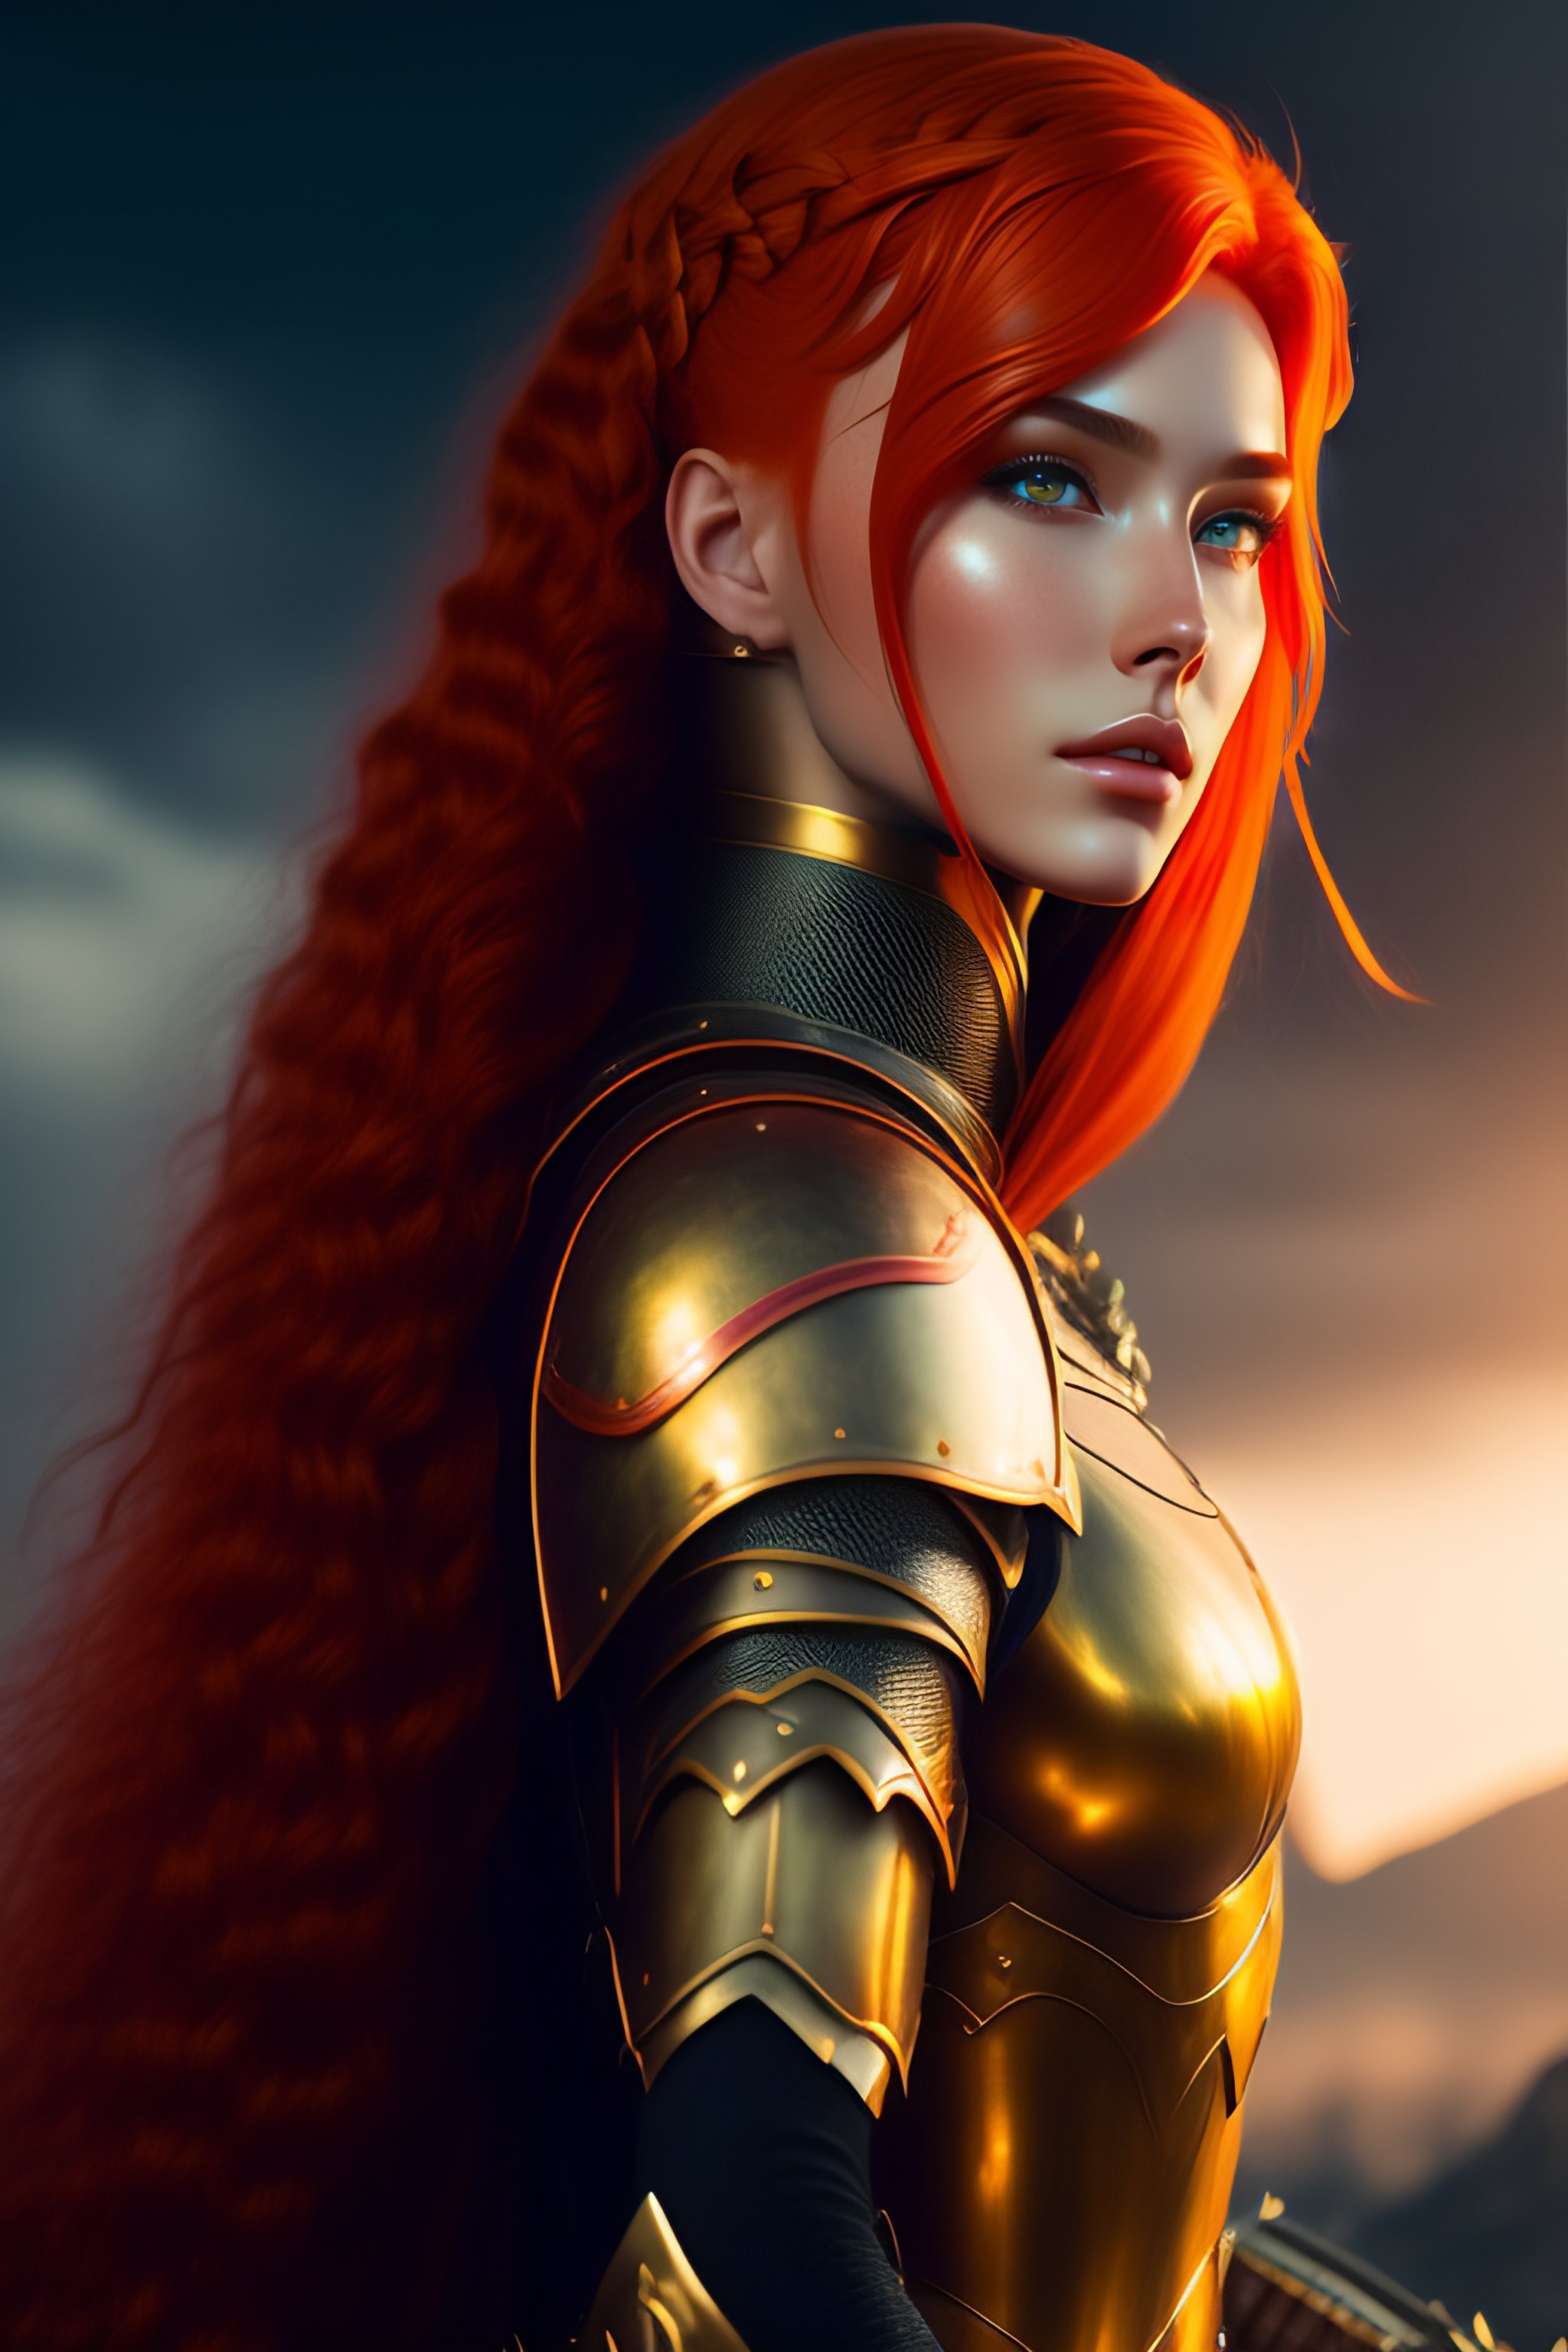 Lexica - Beautiful girl in armor. Ideal figure. Beautiful face. Red ...